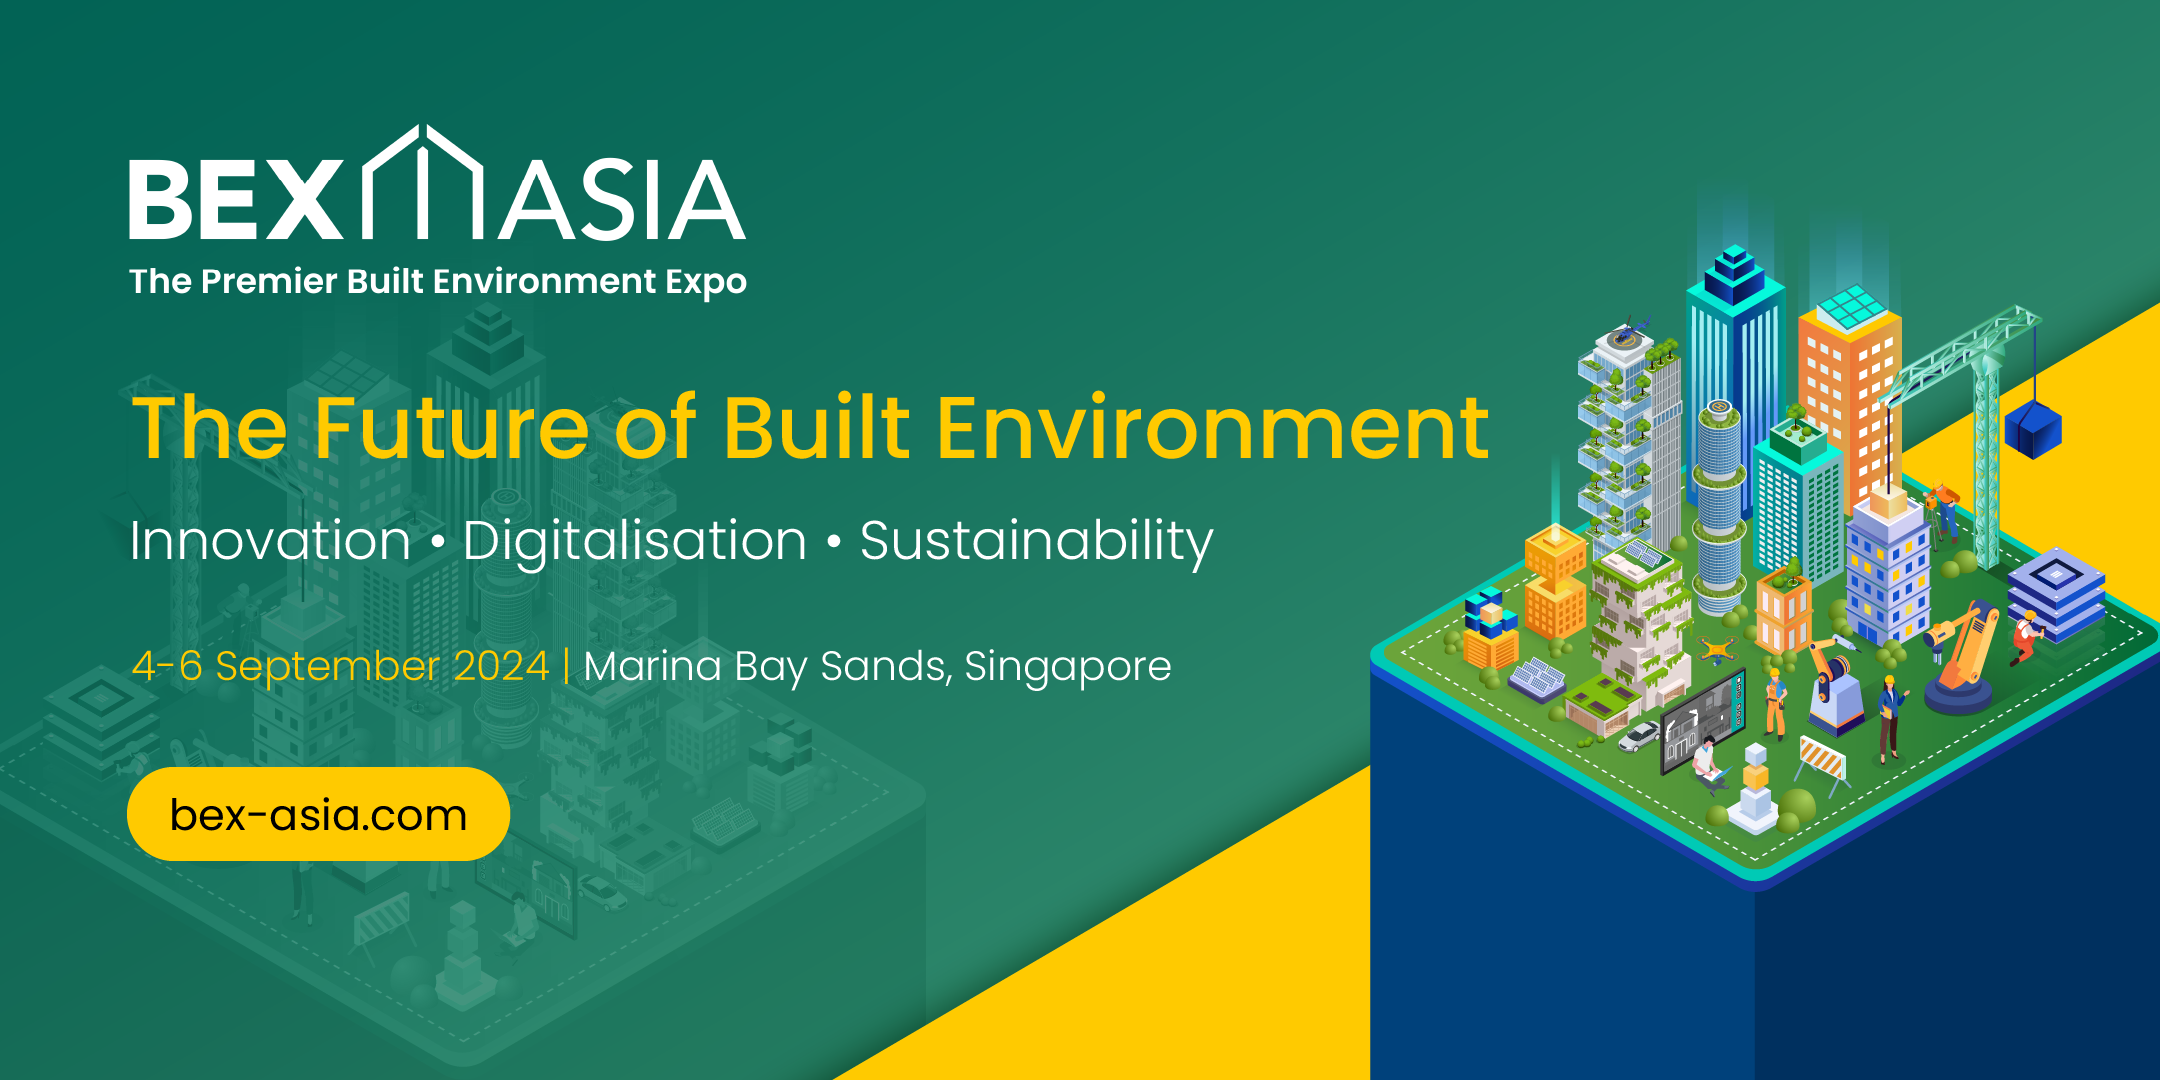 BEX Asia 2024 (The Premier Built Environment Expo), Singapore